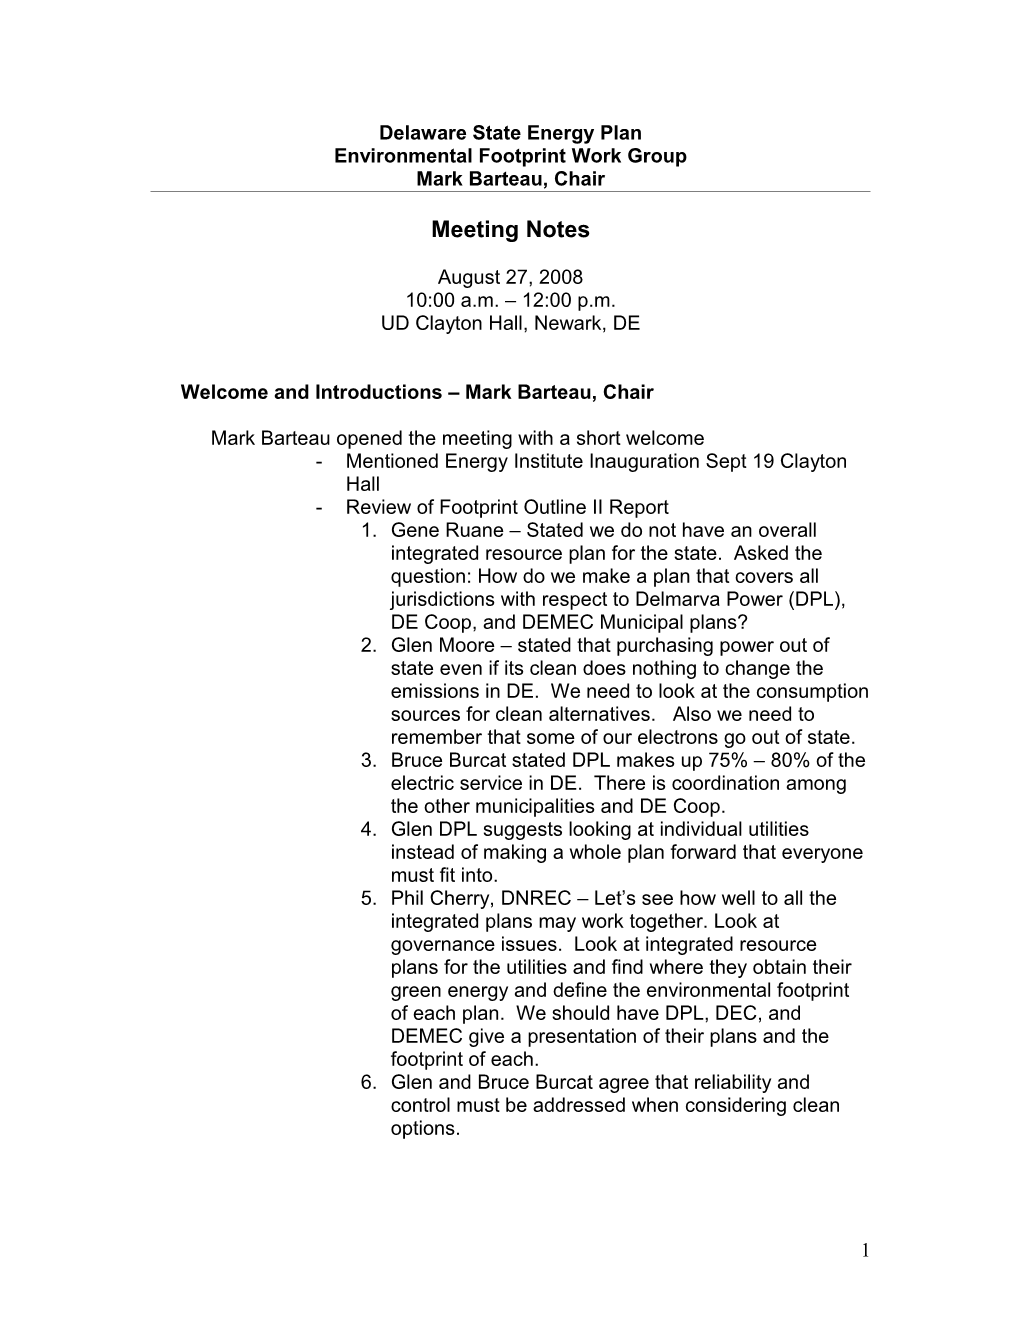 Transmission-Distribution Working Group Agenda May 15, 2008